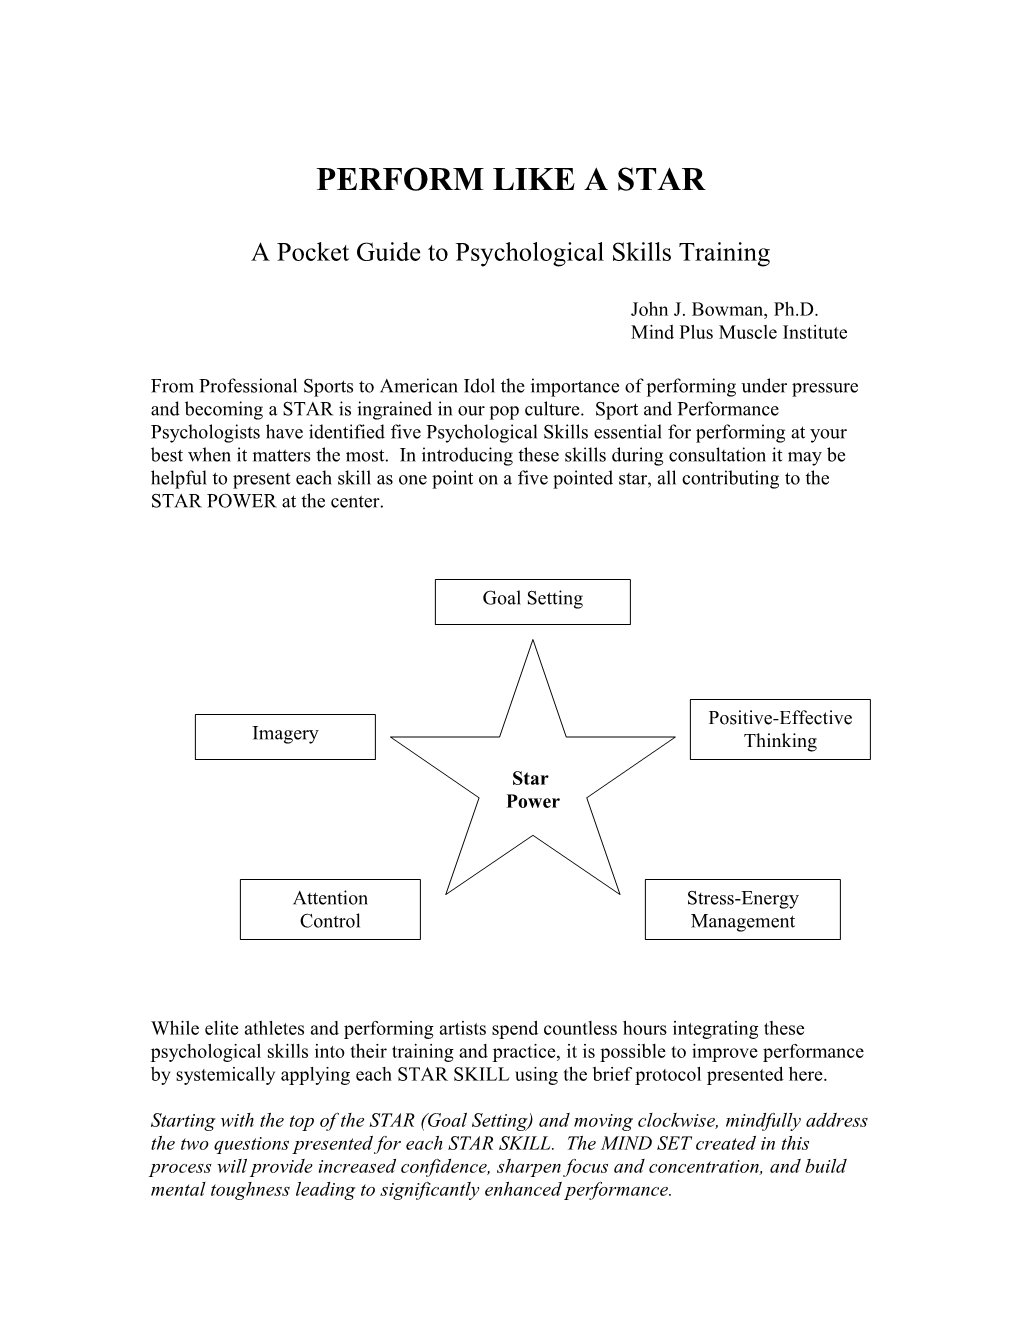 Perform Like a Star